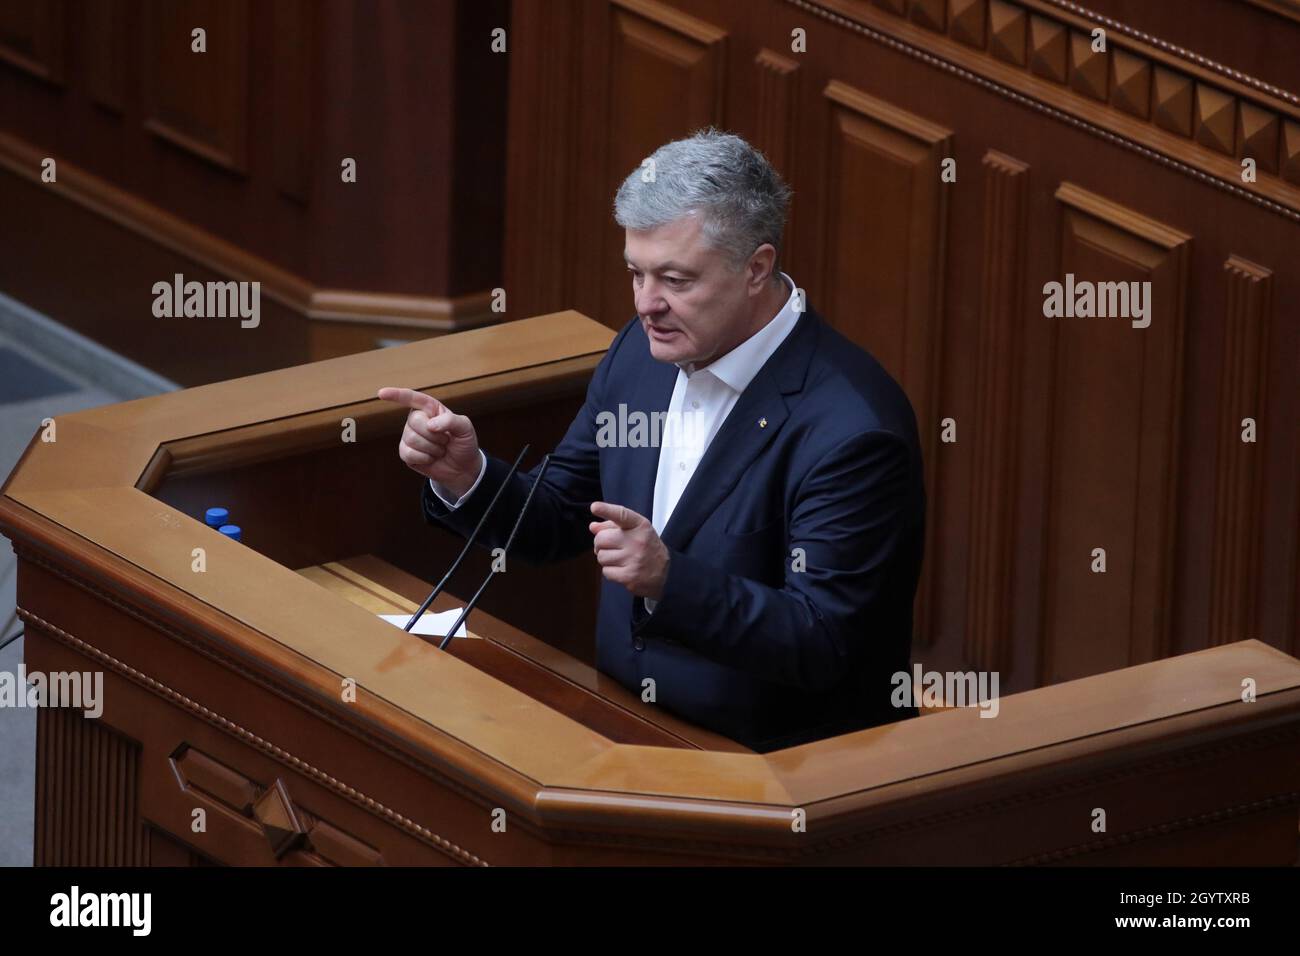 Non Exclusive: KYIV, UKRAINE - OCTOBER 08, 2021 - MP of Ukraine, Fifth President of Ukraine Petro Poroshenko speaks from the rostrum during the parlia Stock Photo